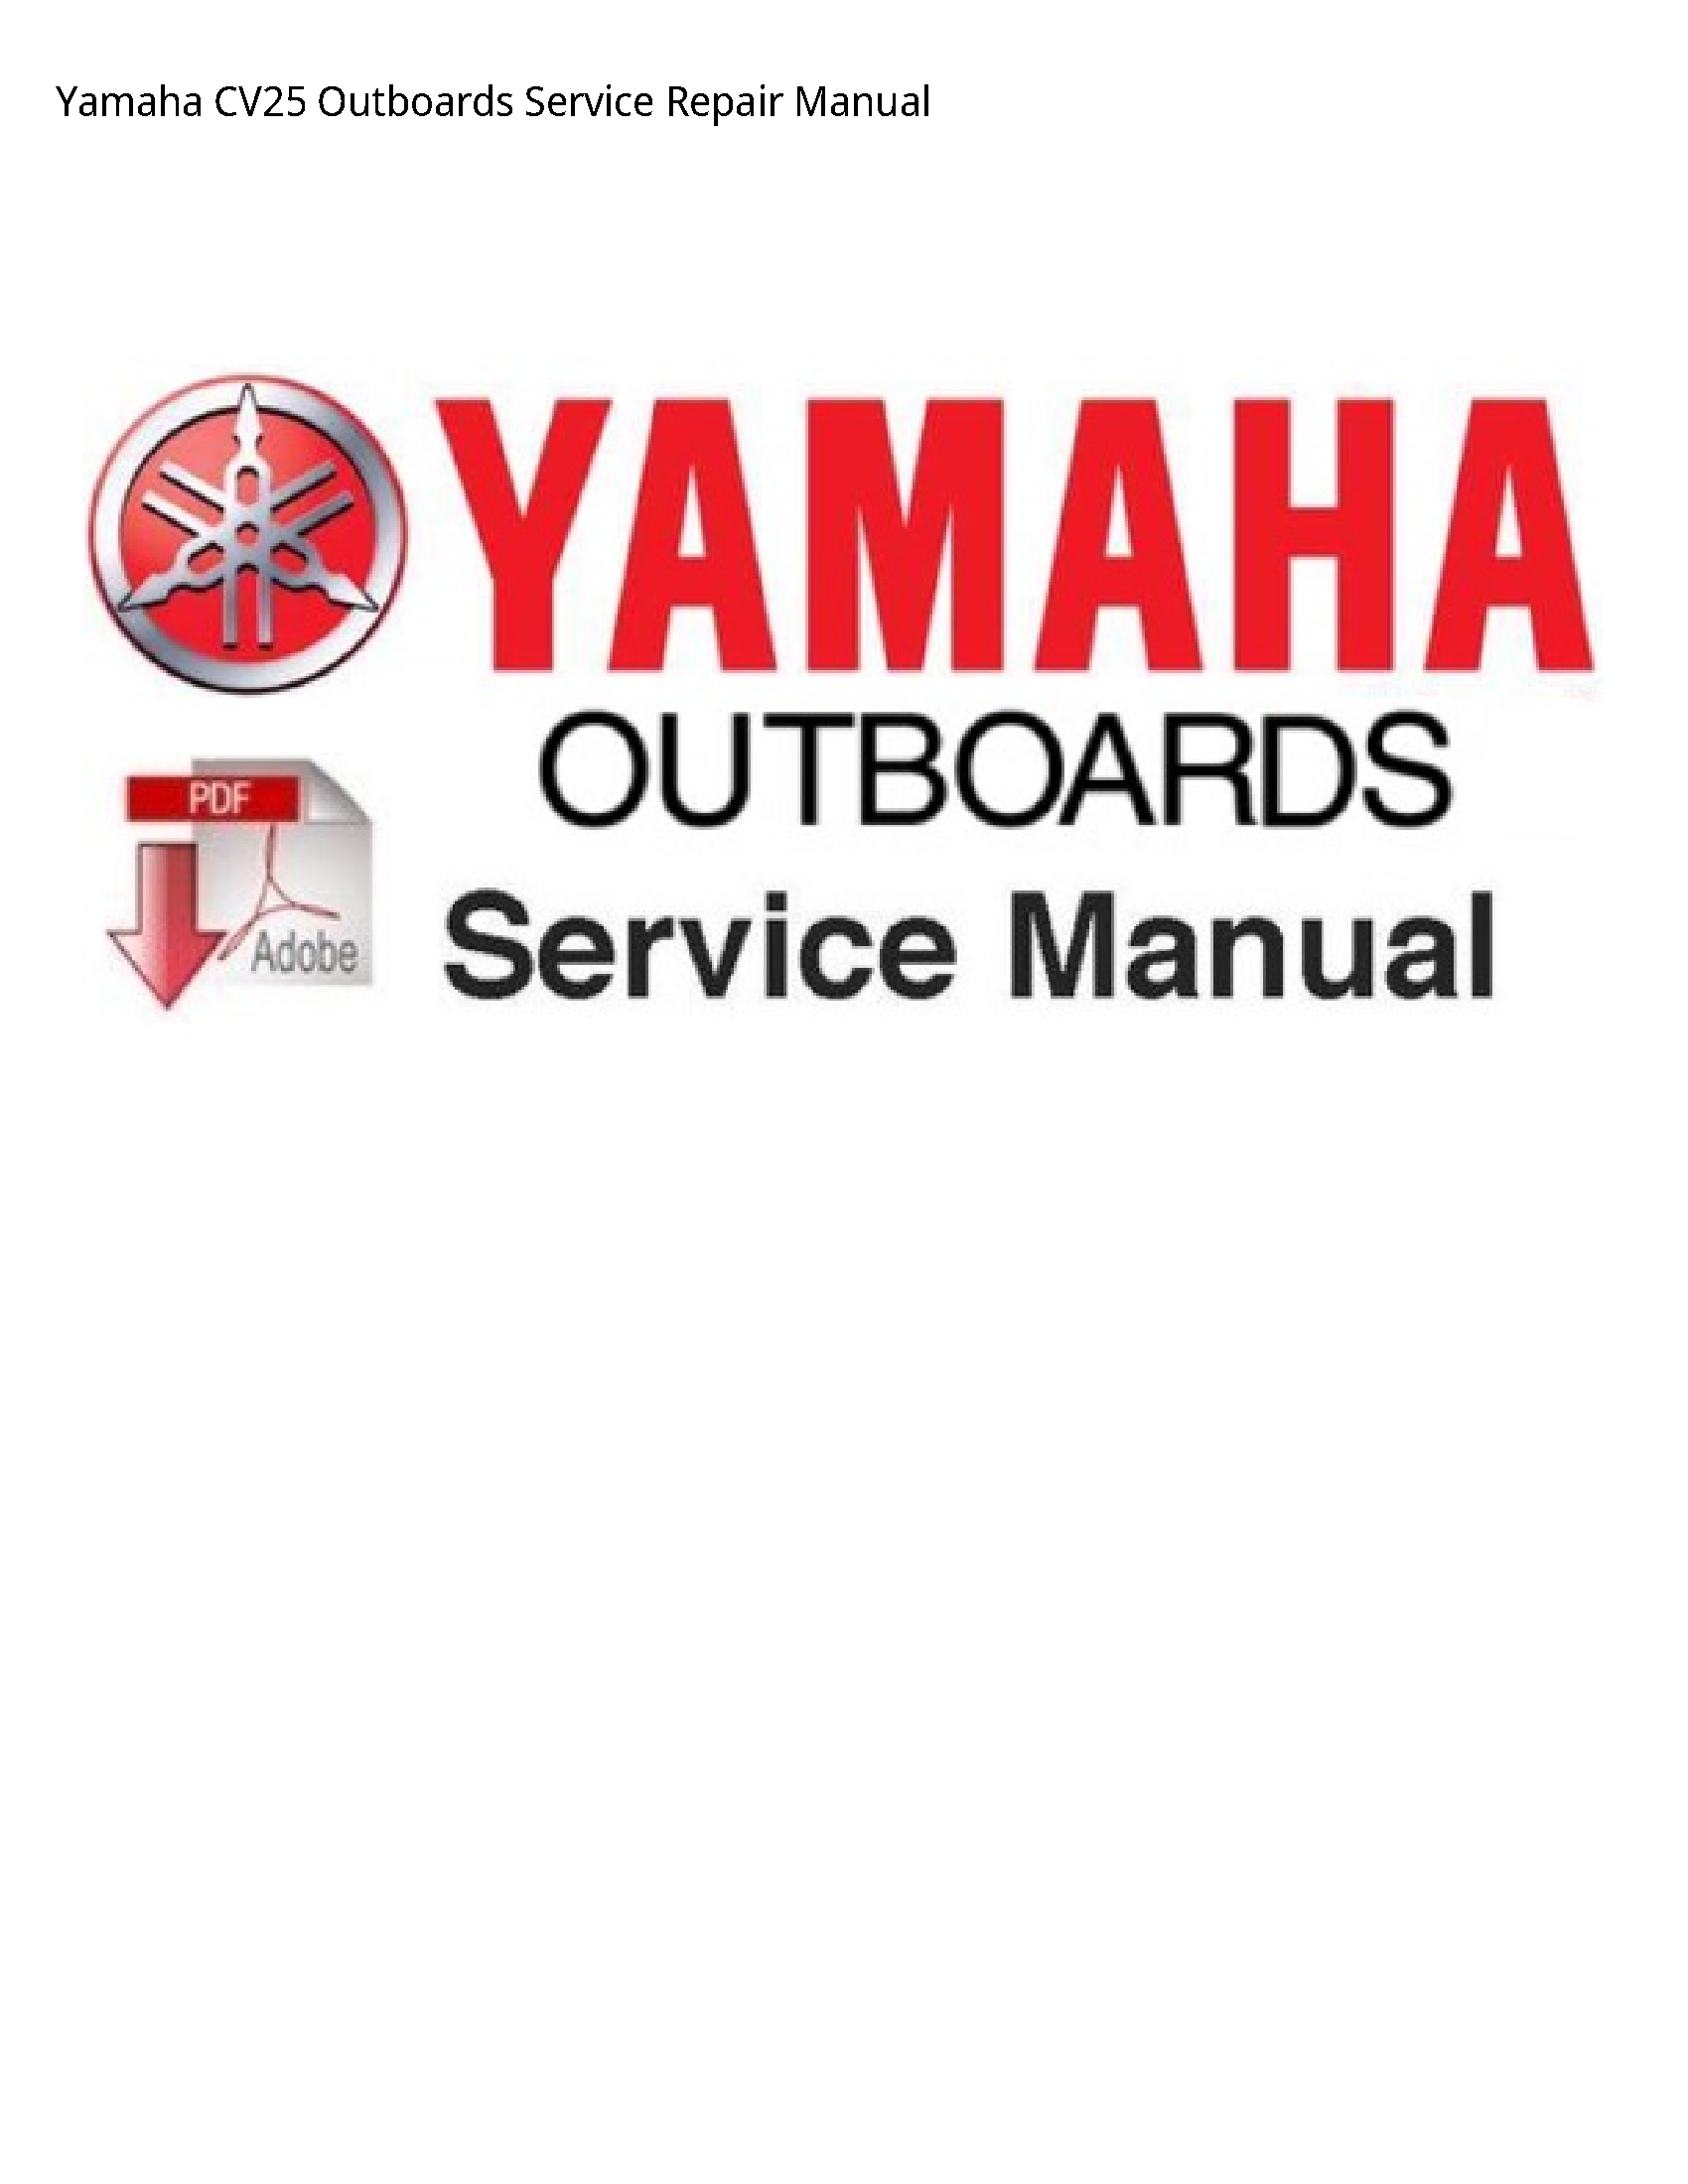 Yamaha CV25 Outboards manual